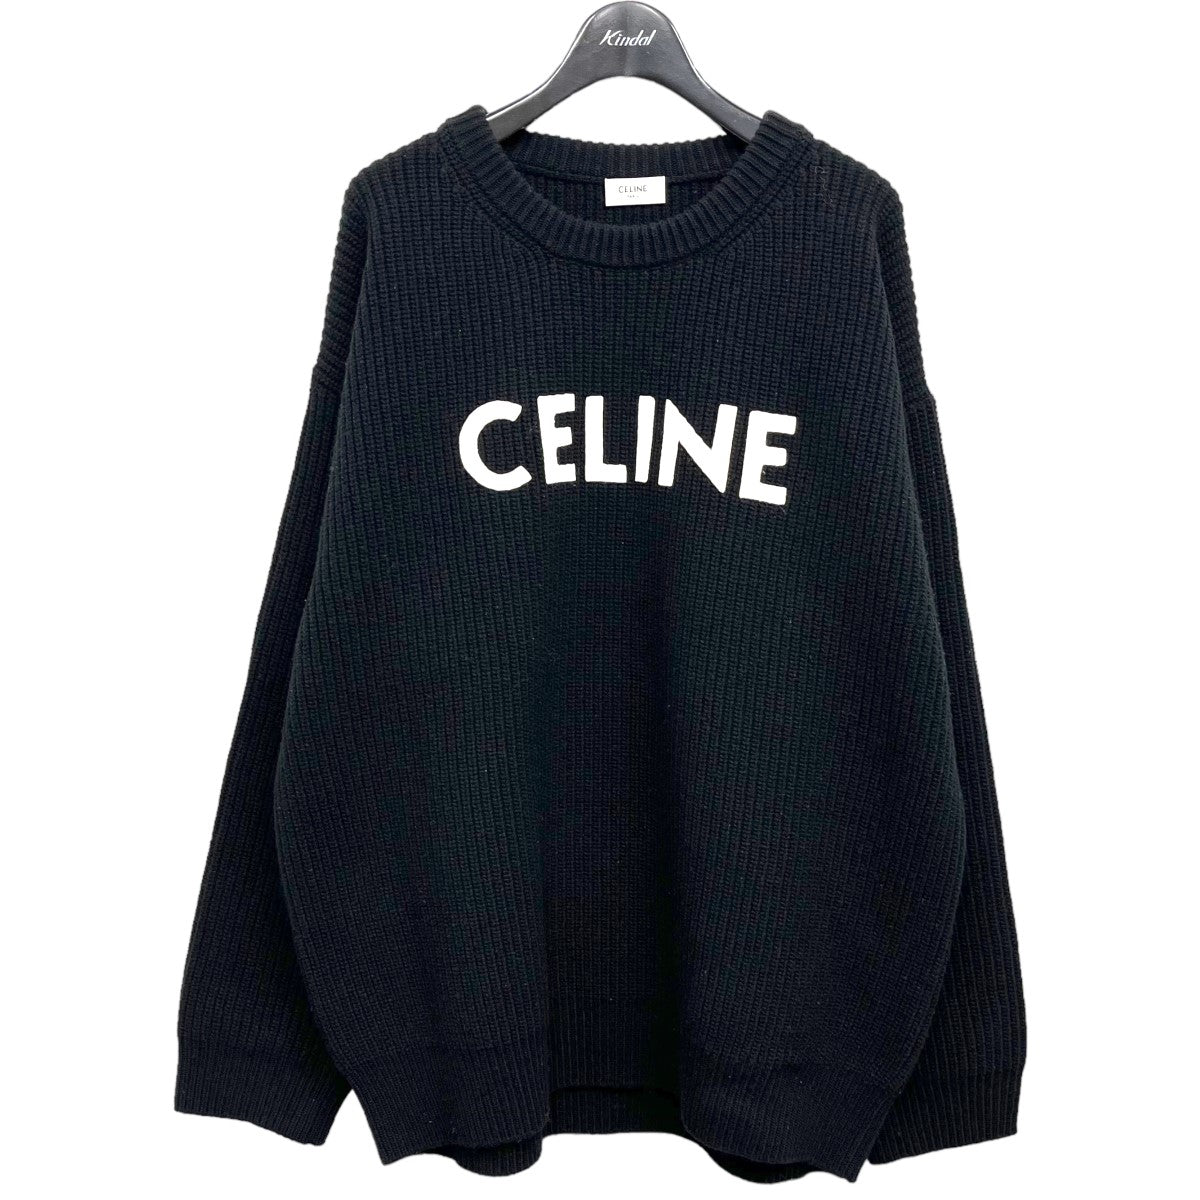 CELINE(セリーヌ) 2021AW オーバーサイズリブ編みウールニットセーター ...